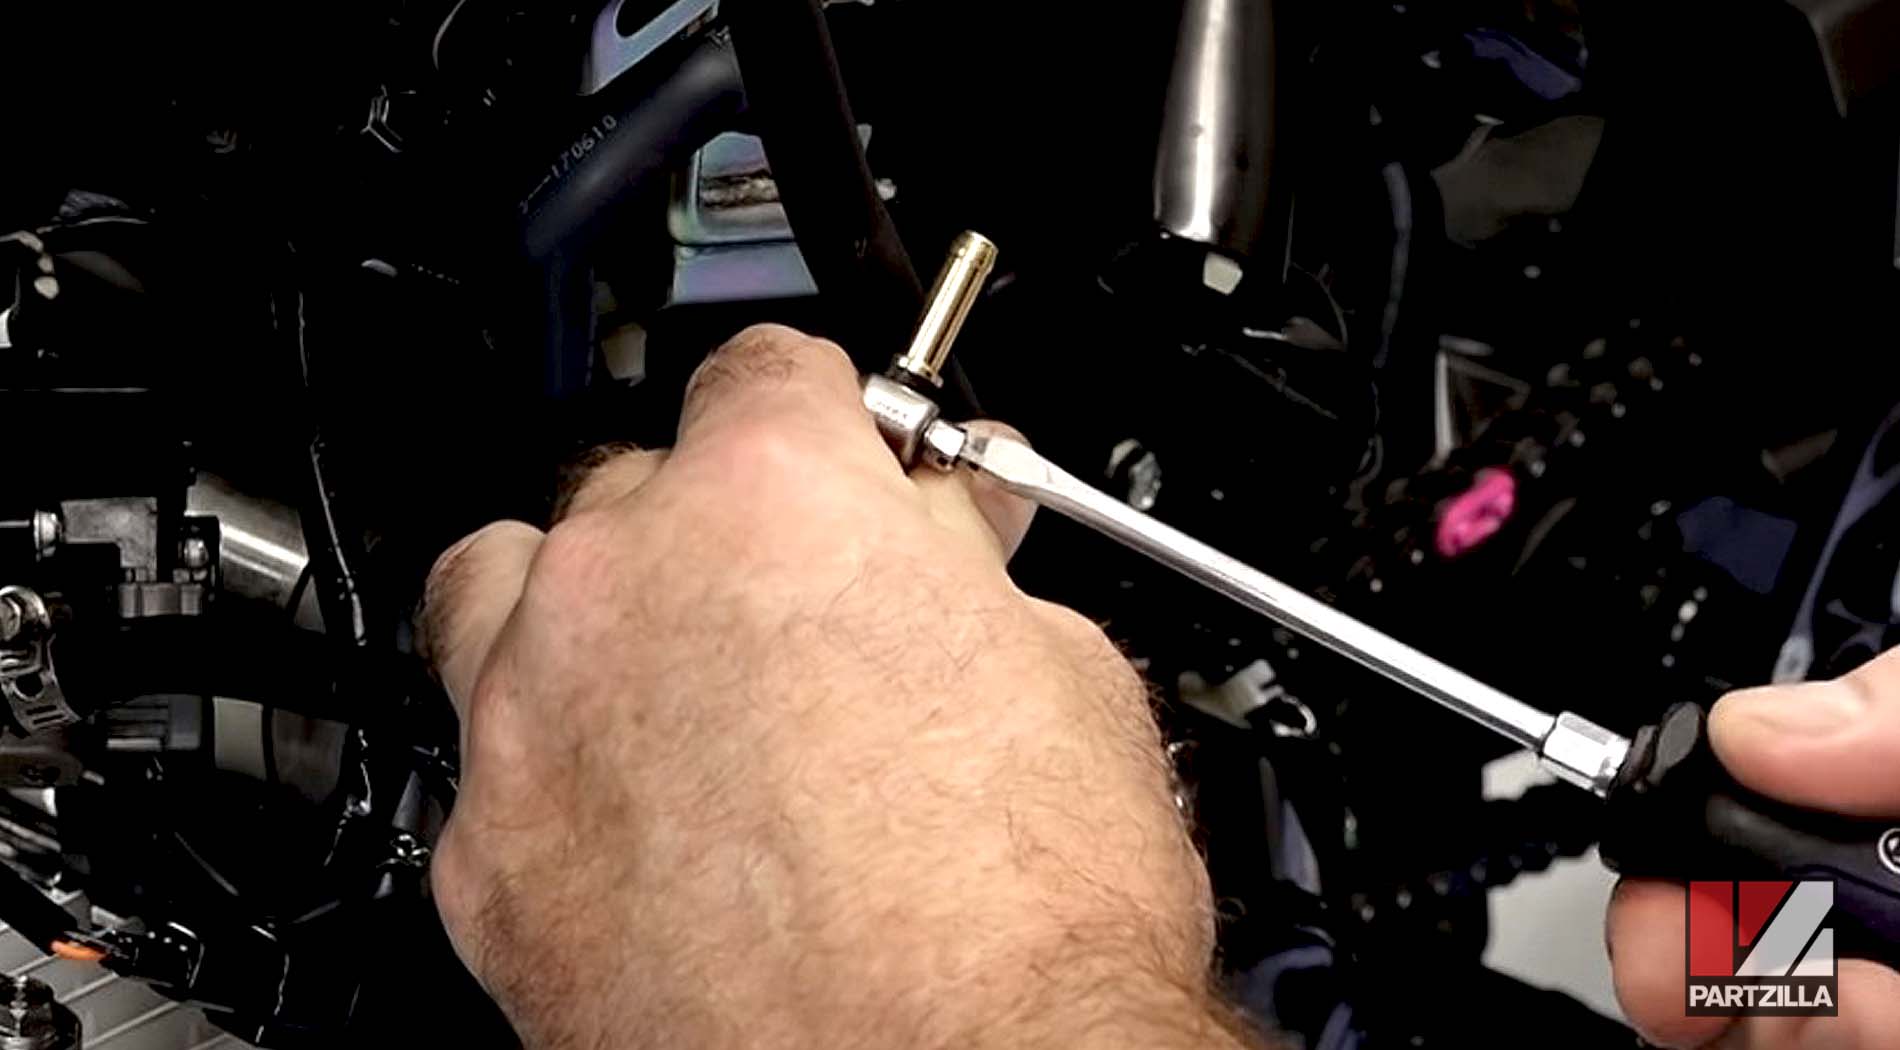 2018 Honda Grom aftermaket throttle assembly upgrade installation